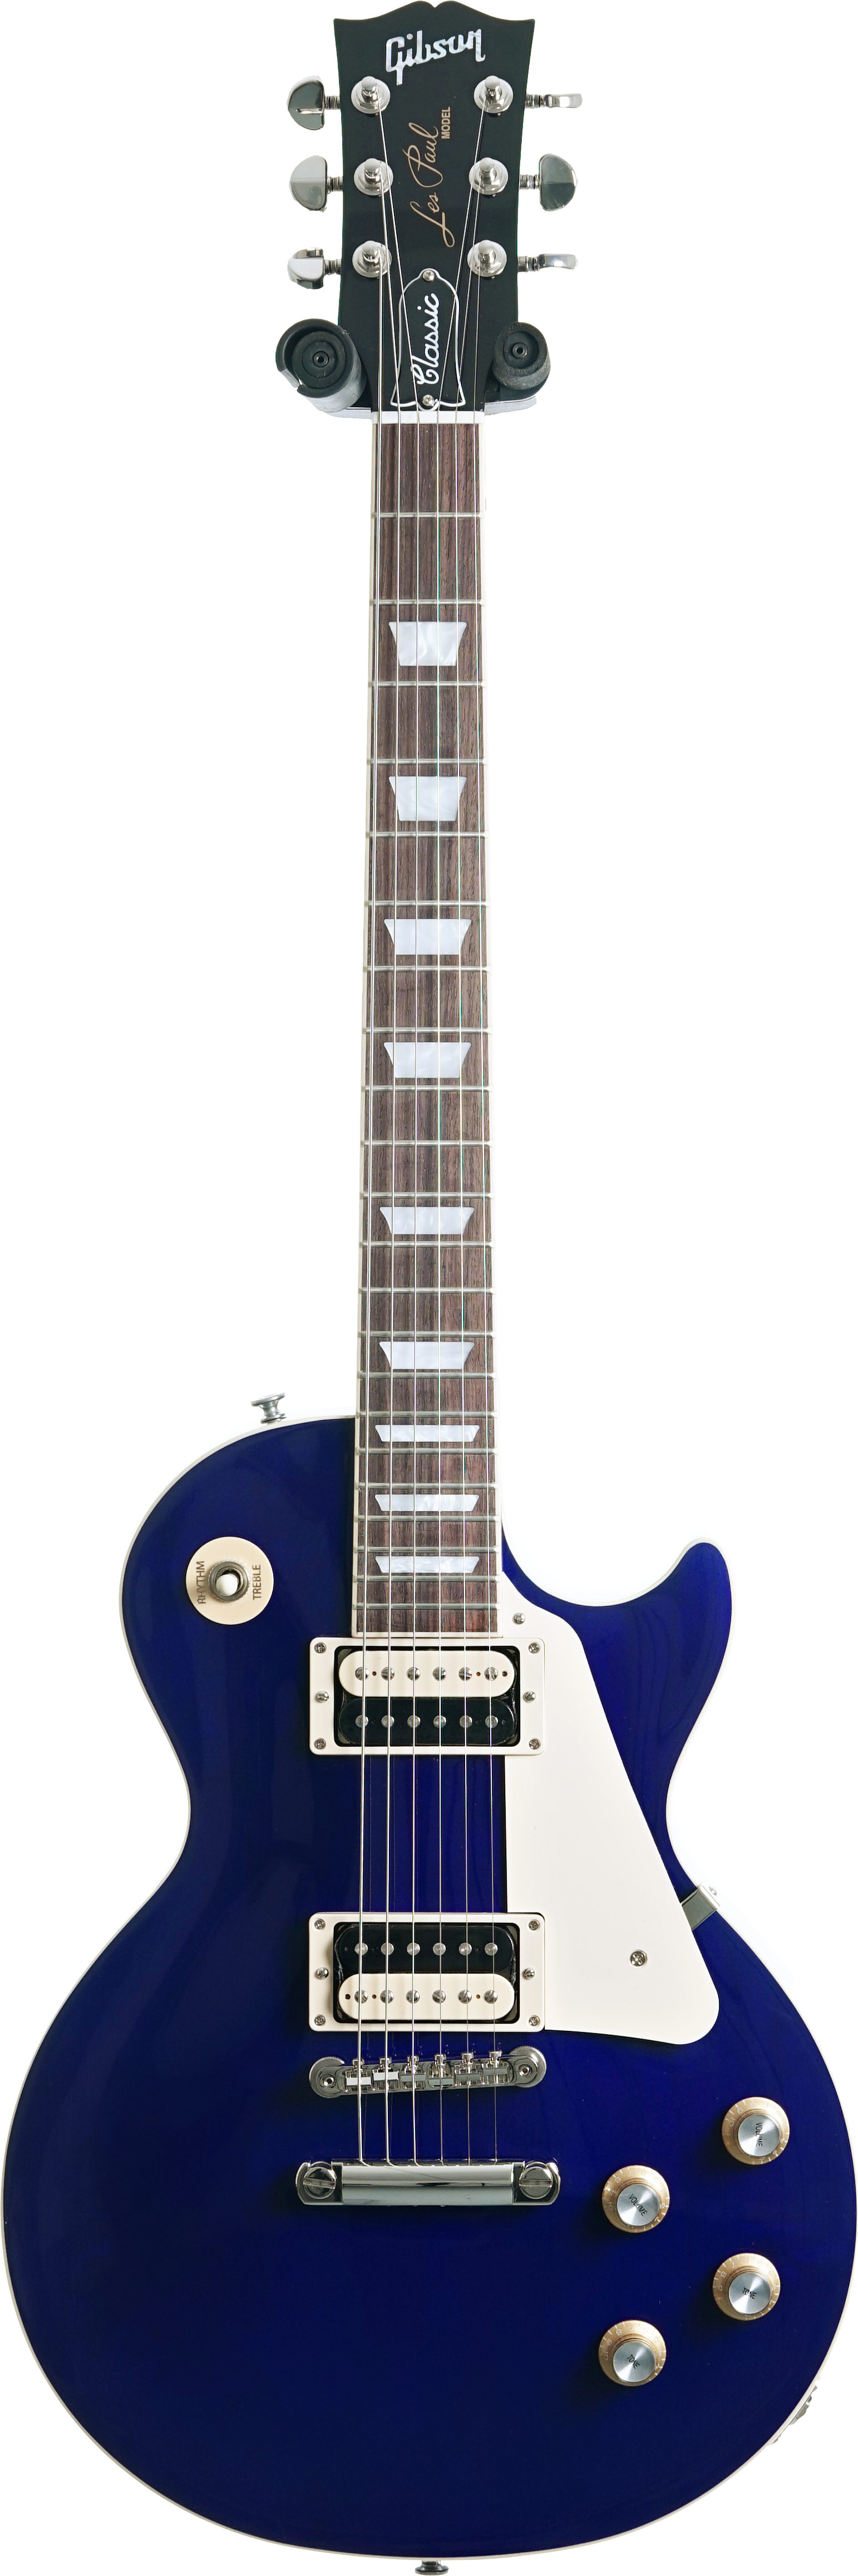 Gibson Les Paul Classic Chicago Blue | guitarguitar